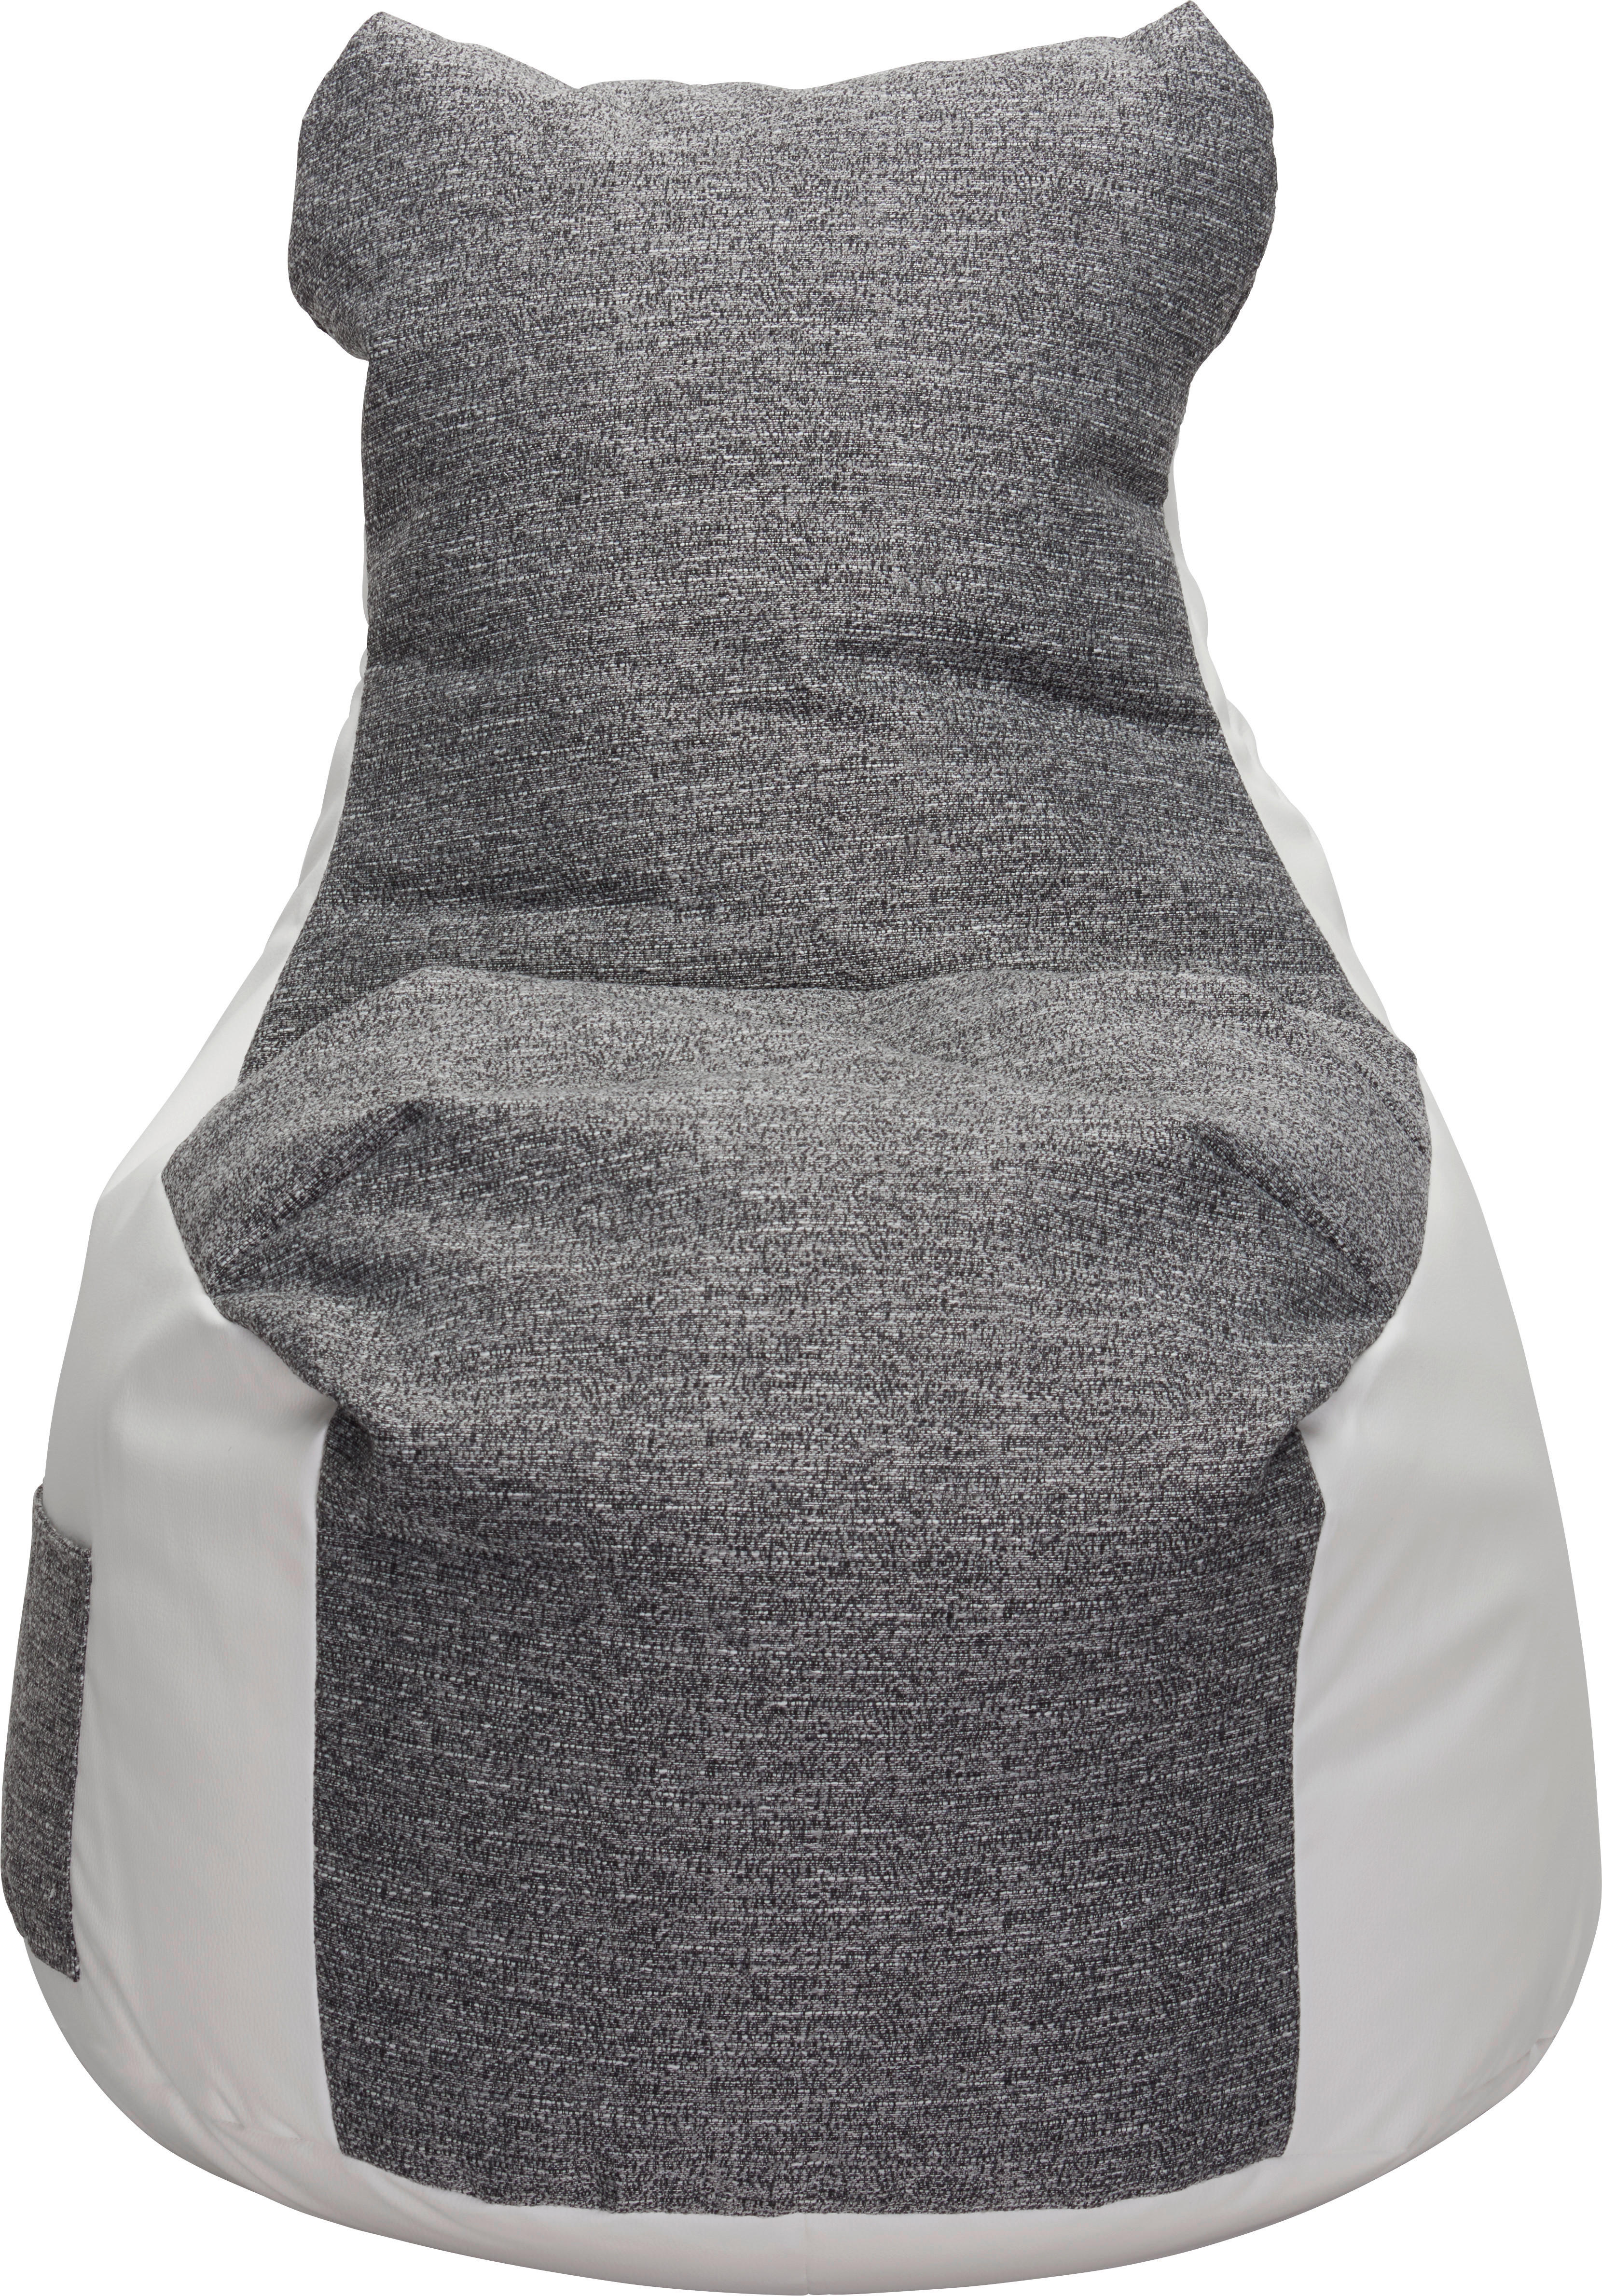 SEDACÍ PYTEL, šedá, bílá - šedá/bílá, Design, textil (85/100/85cm) - Boxxx